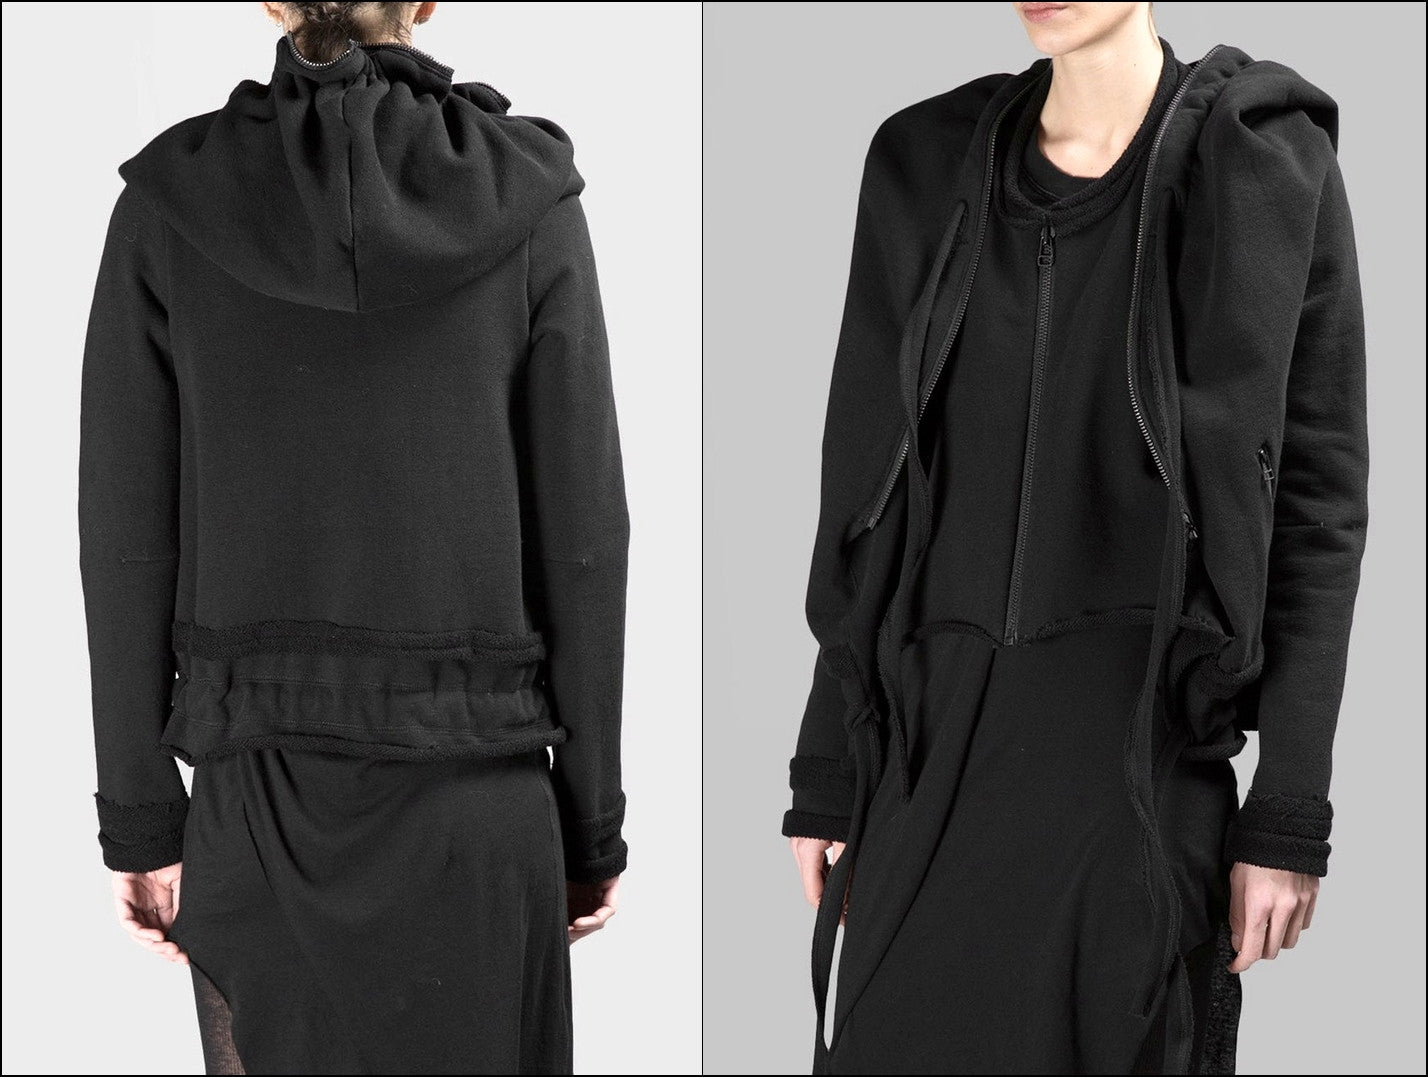 Asymmetric Raw Cut Seam Detail Sweaters Hoodie / Zipped Side Pockets  - Bottom Drawstrings